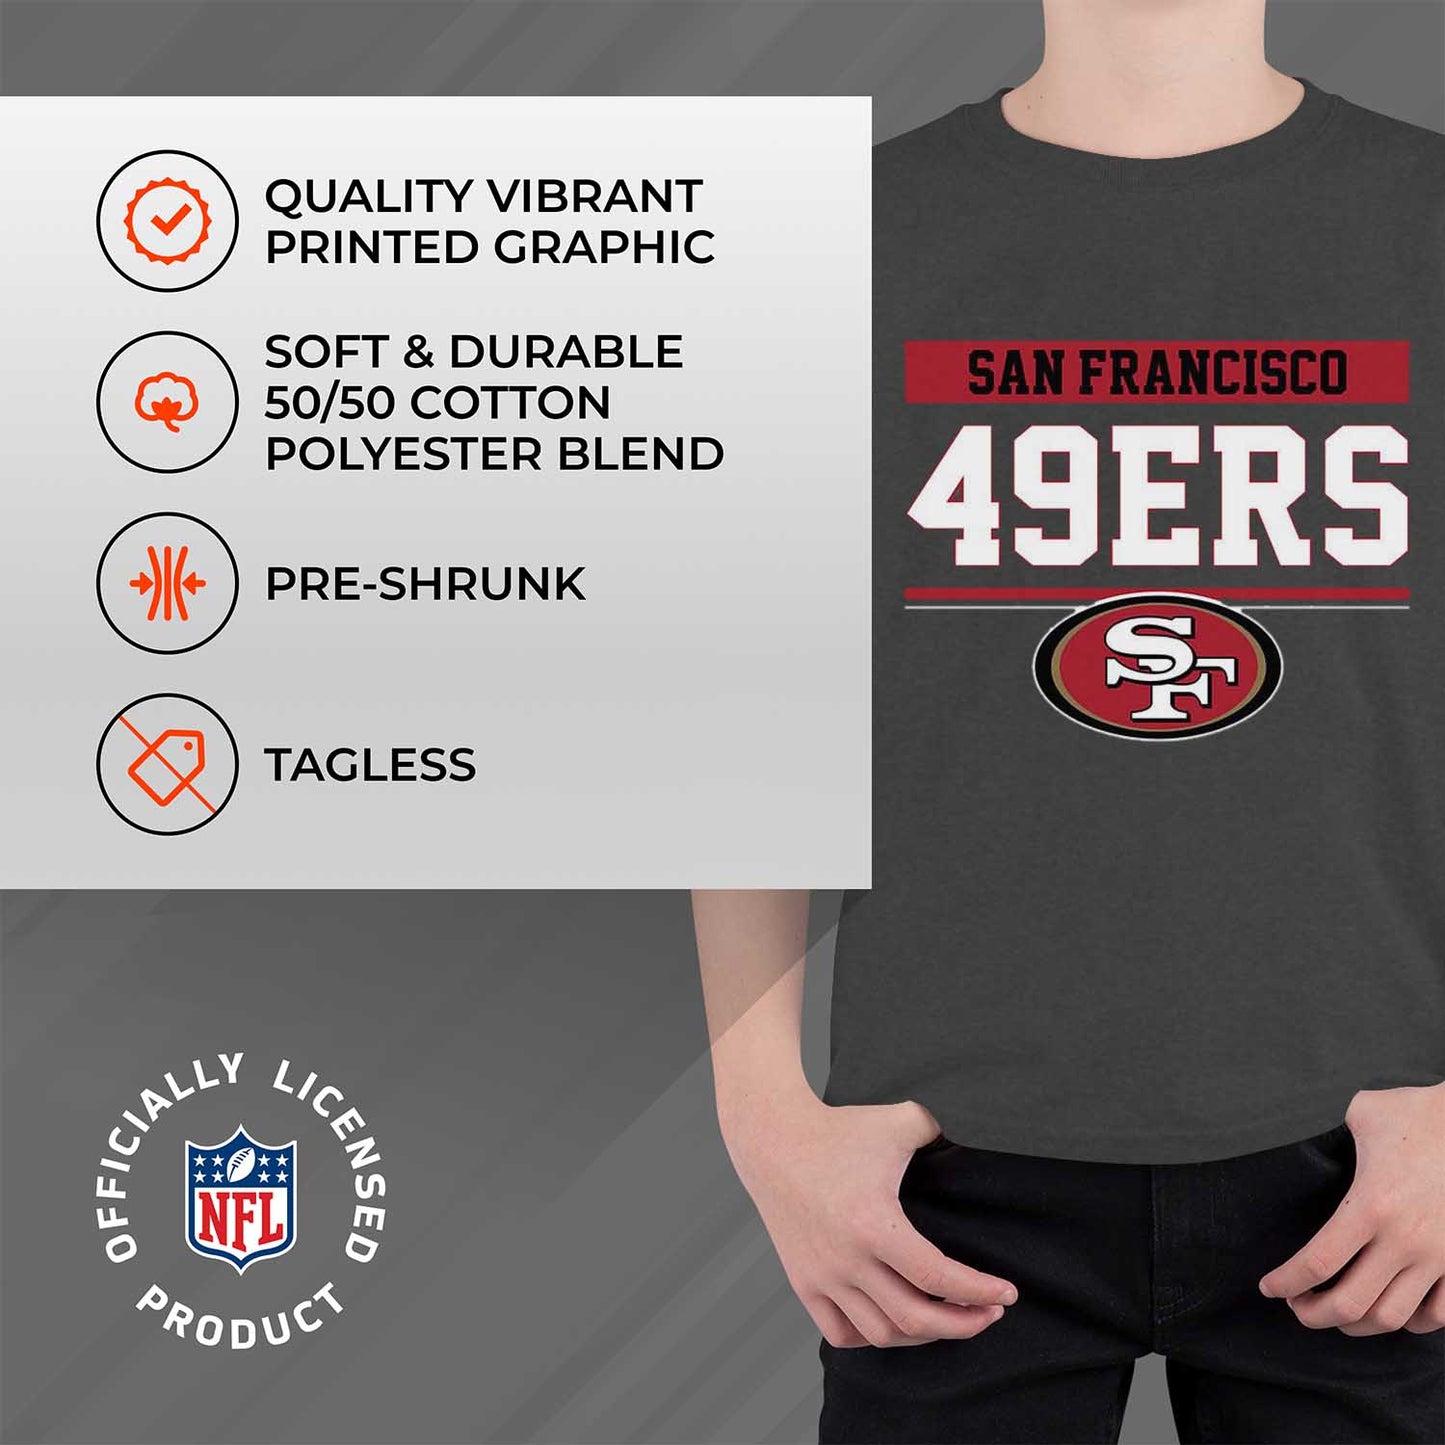 San Francisco 49ers NFL Youth Short Sleeve Charcoal T Shirt - Charcoal